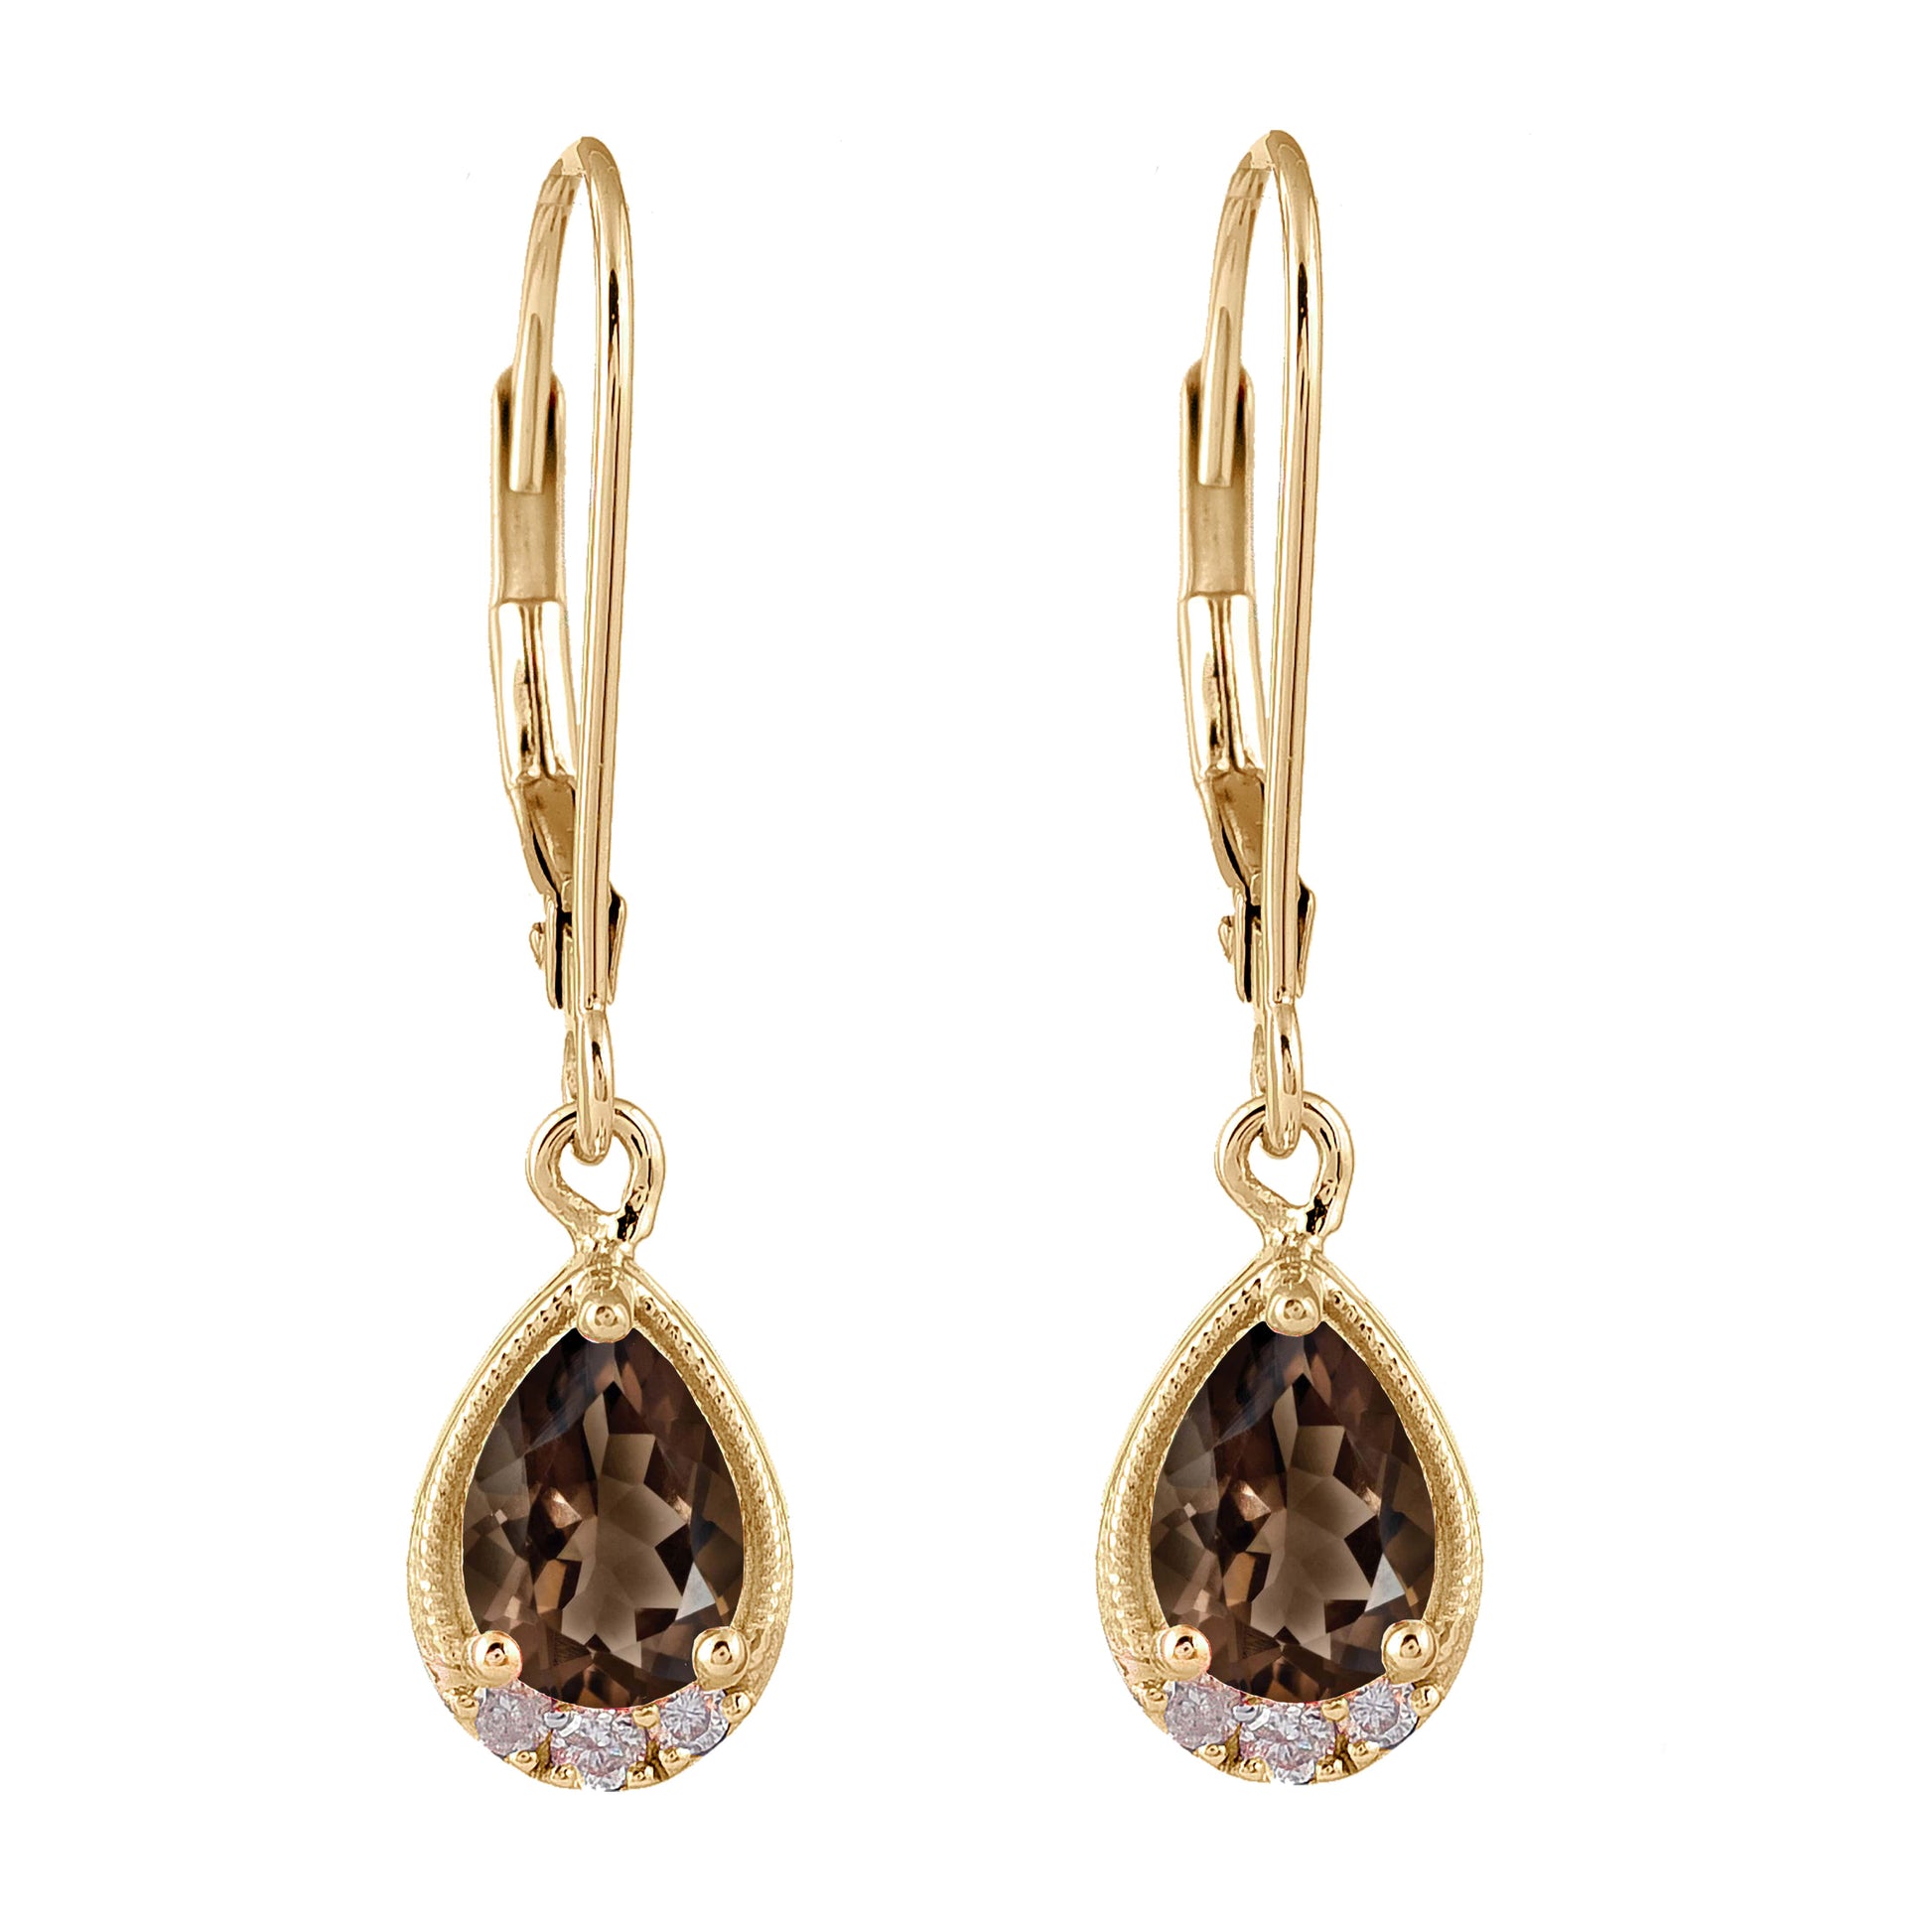 these stunning smoky quartz dangle earrings